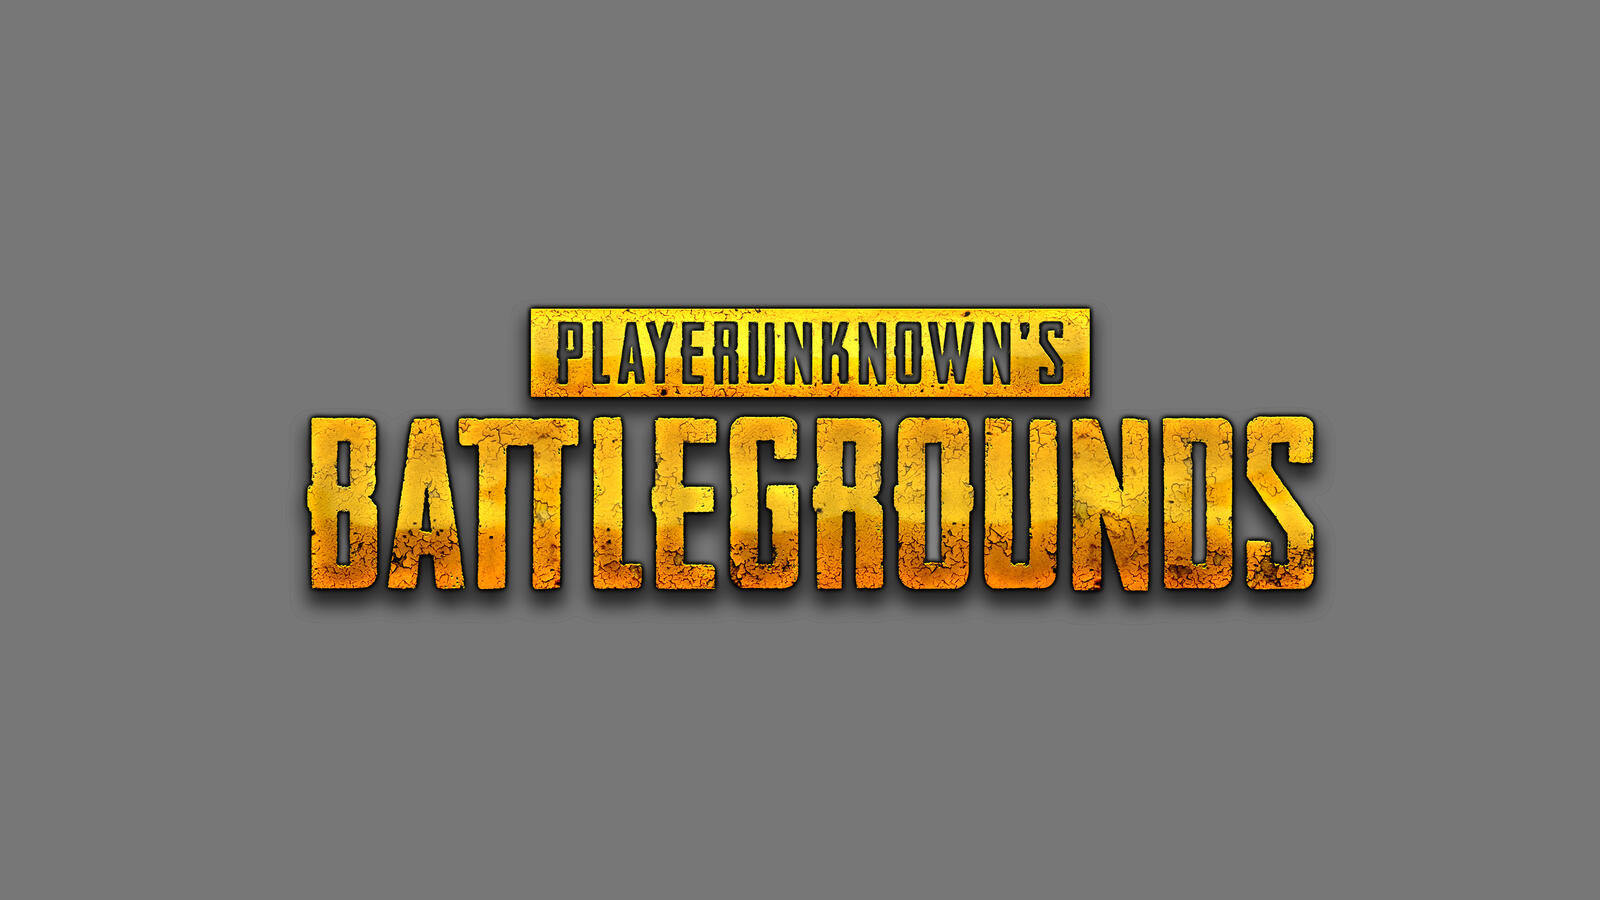 Free photo Playerunknowns Battlegrounds game logo on gray background